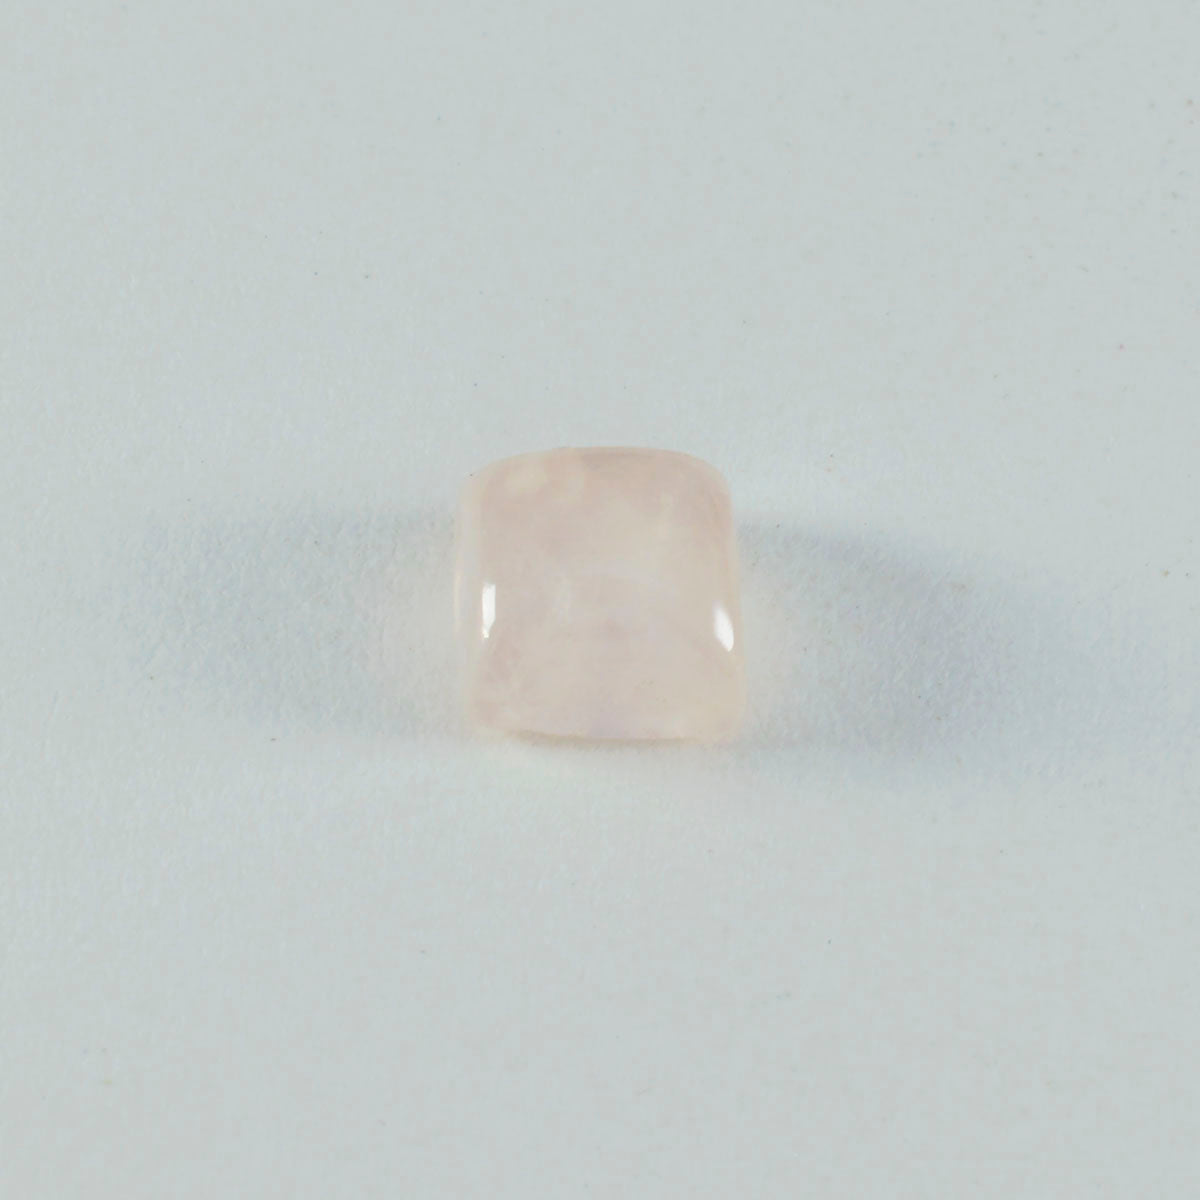 Riyogems 1PC Pink Rose Quartz Cabochon 15x15 mm Square Shape beauty Quality Stone